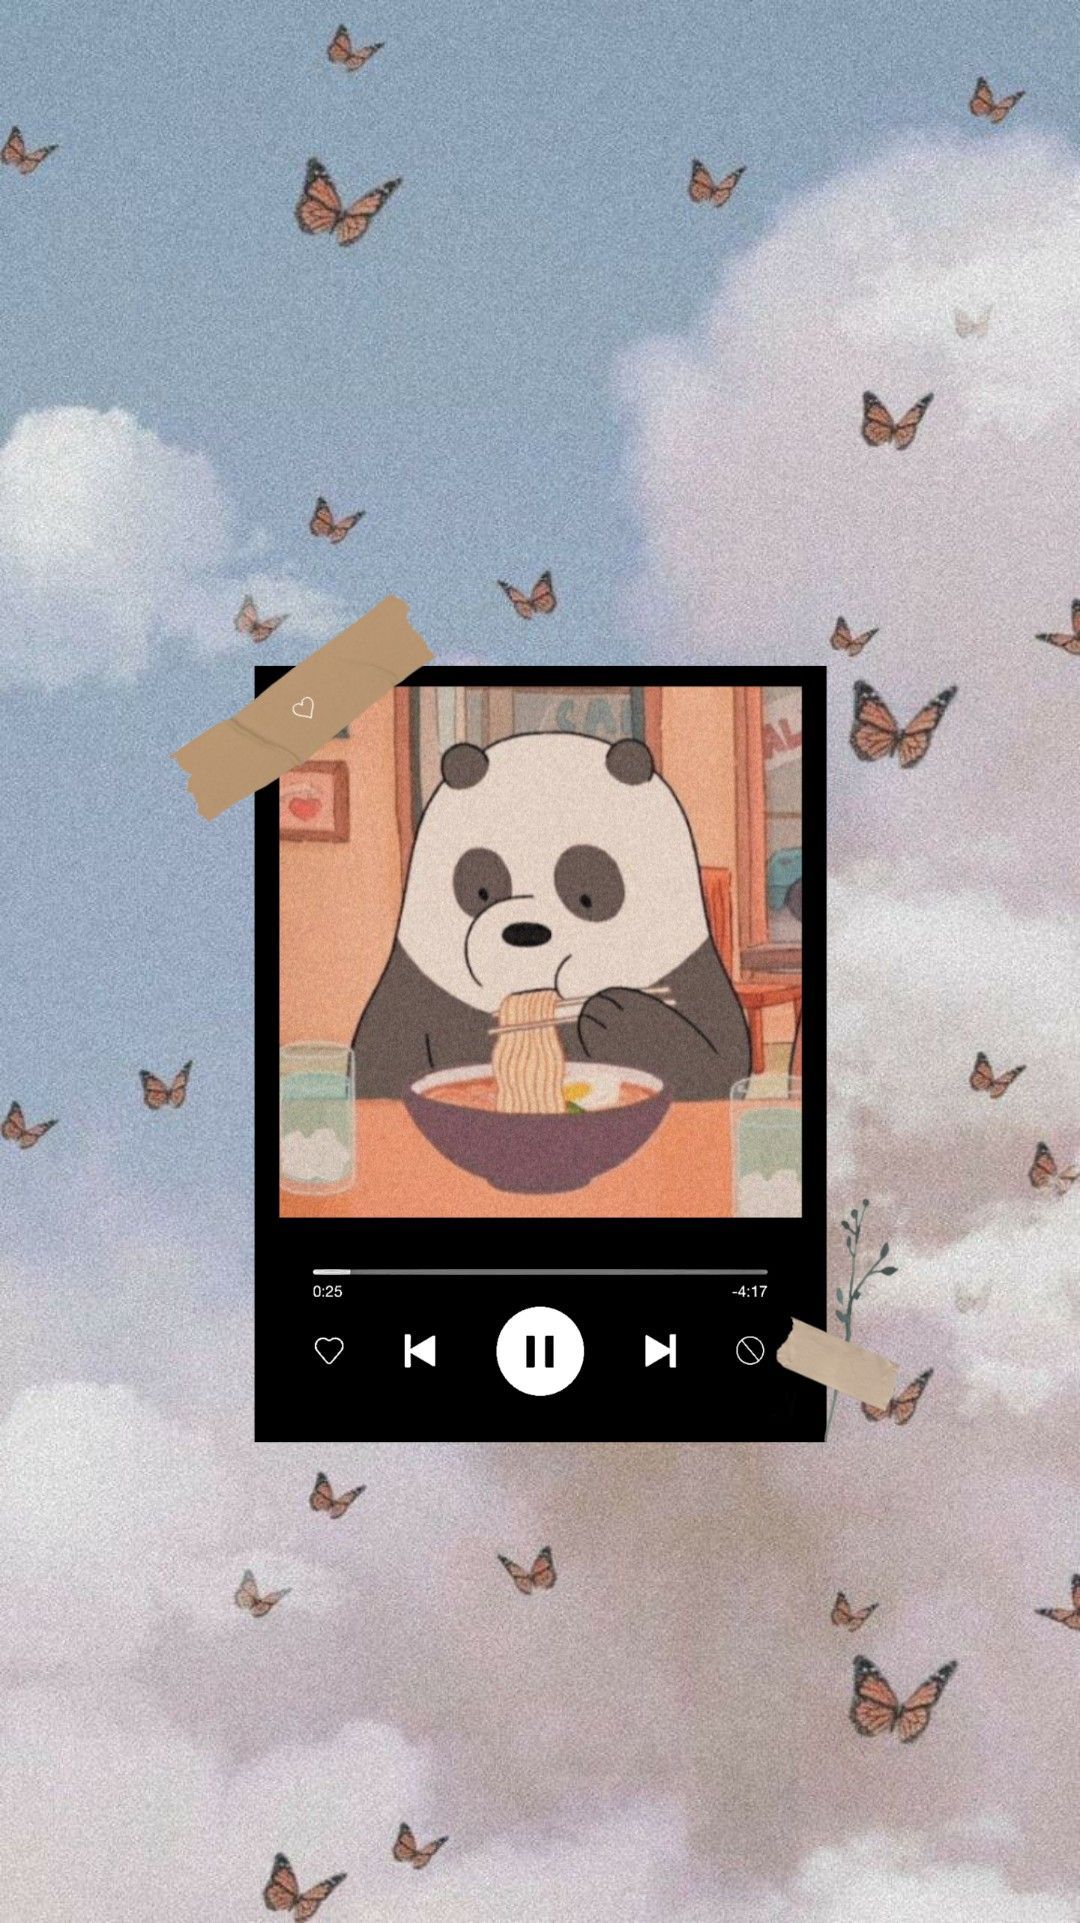 Aesthetic wallpaper with a panda eating noodles - Panda